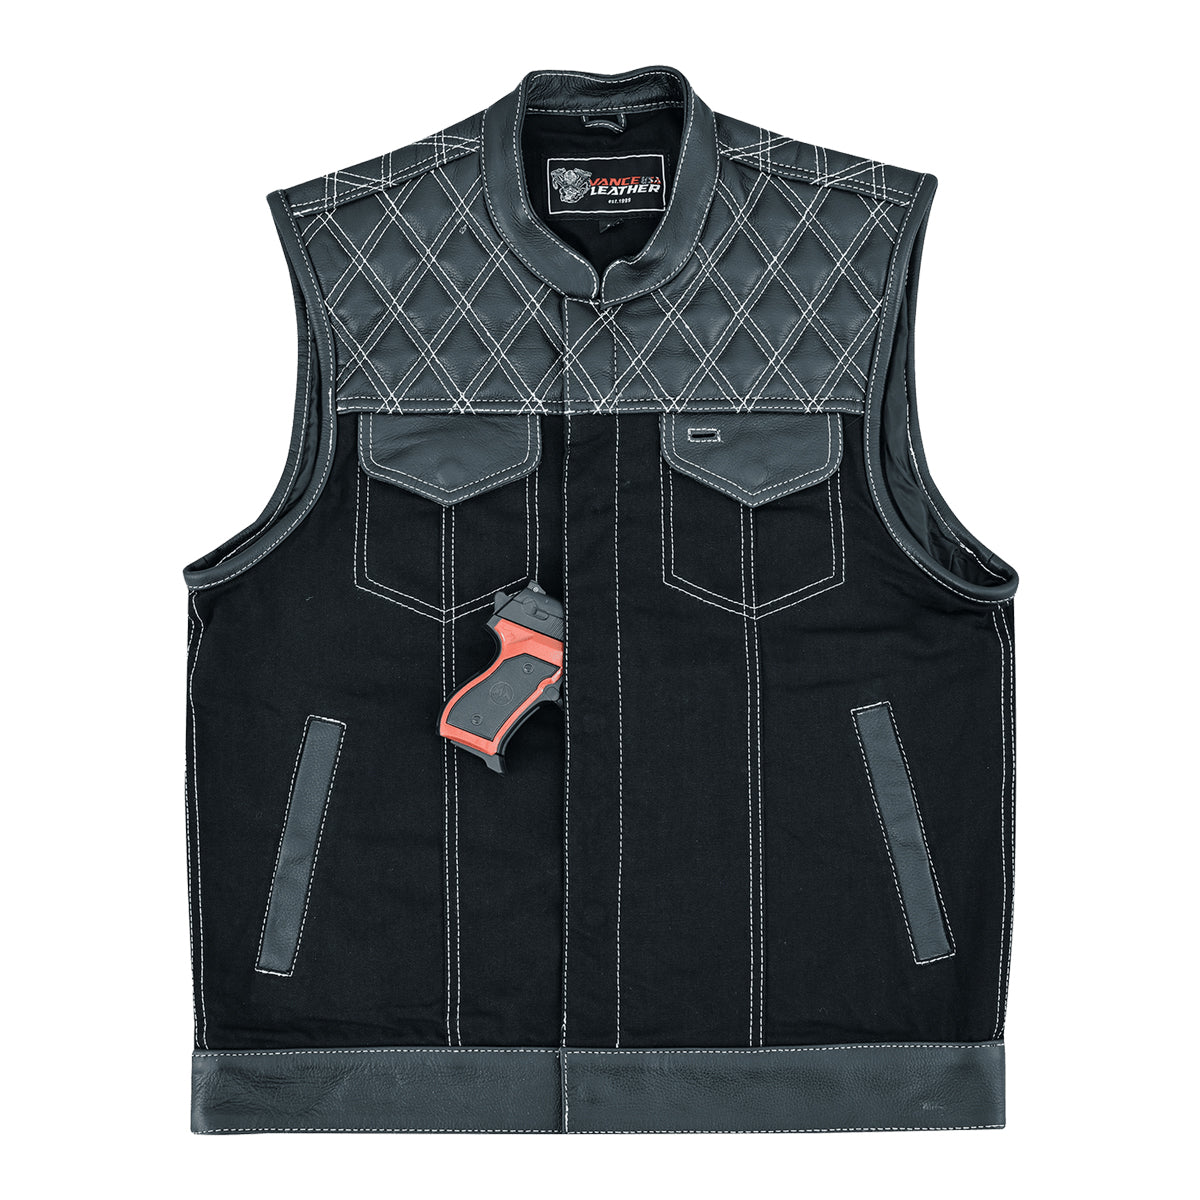 Men's Denim & Leather Motorcycle Vest with Conceal Carry Pockets, SOA Biker Club Vest White Stitching, Diamond Padding, Snap & Zipper Closure